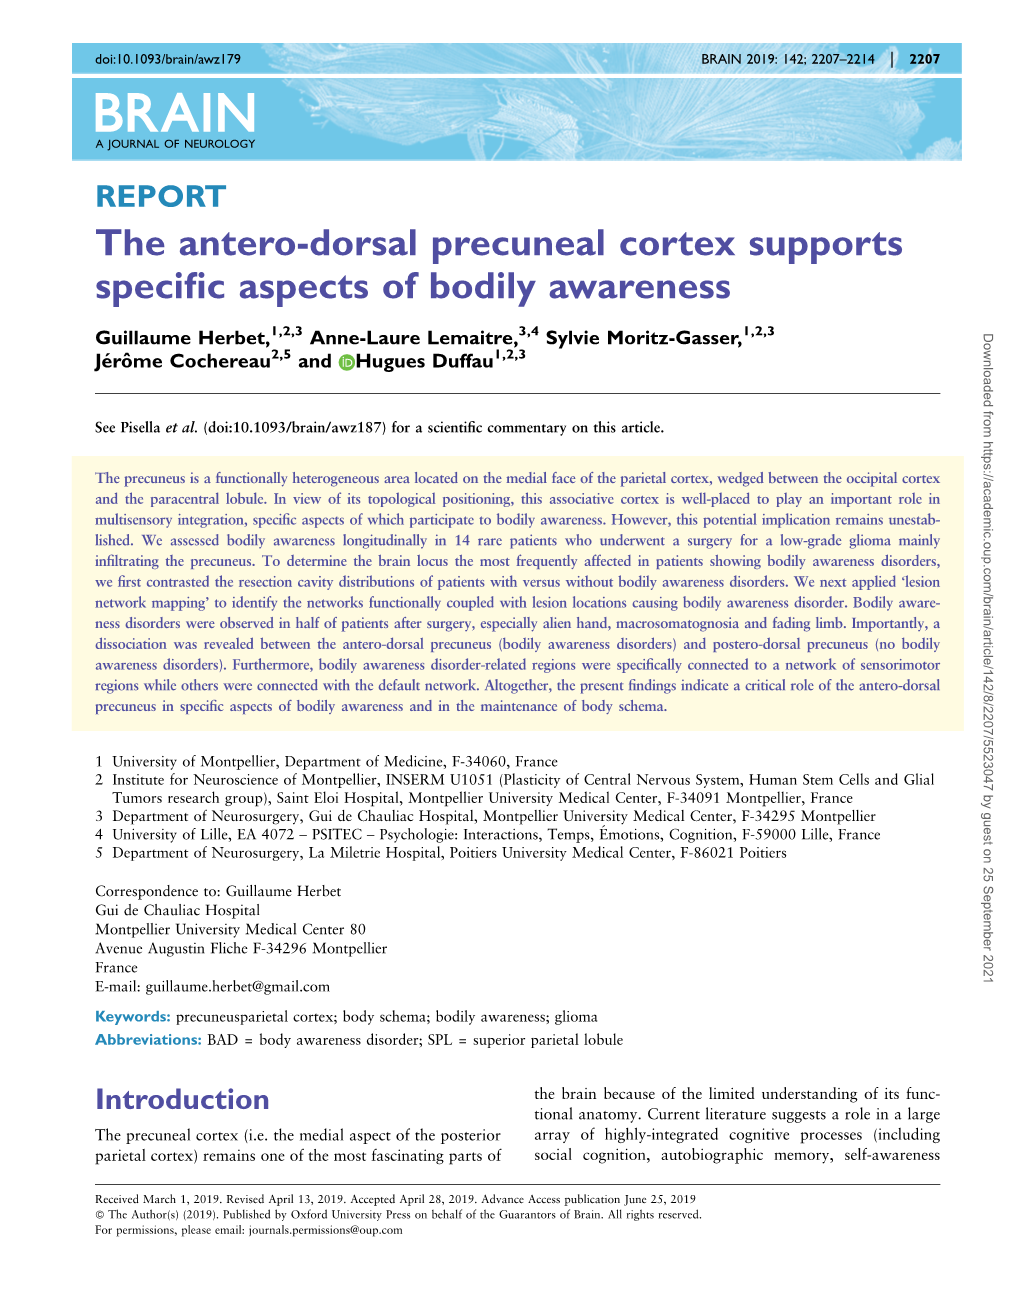 The Antero-Dorsal Precuneal Cortex Supports Specific Aspects of Bodily